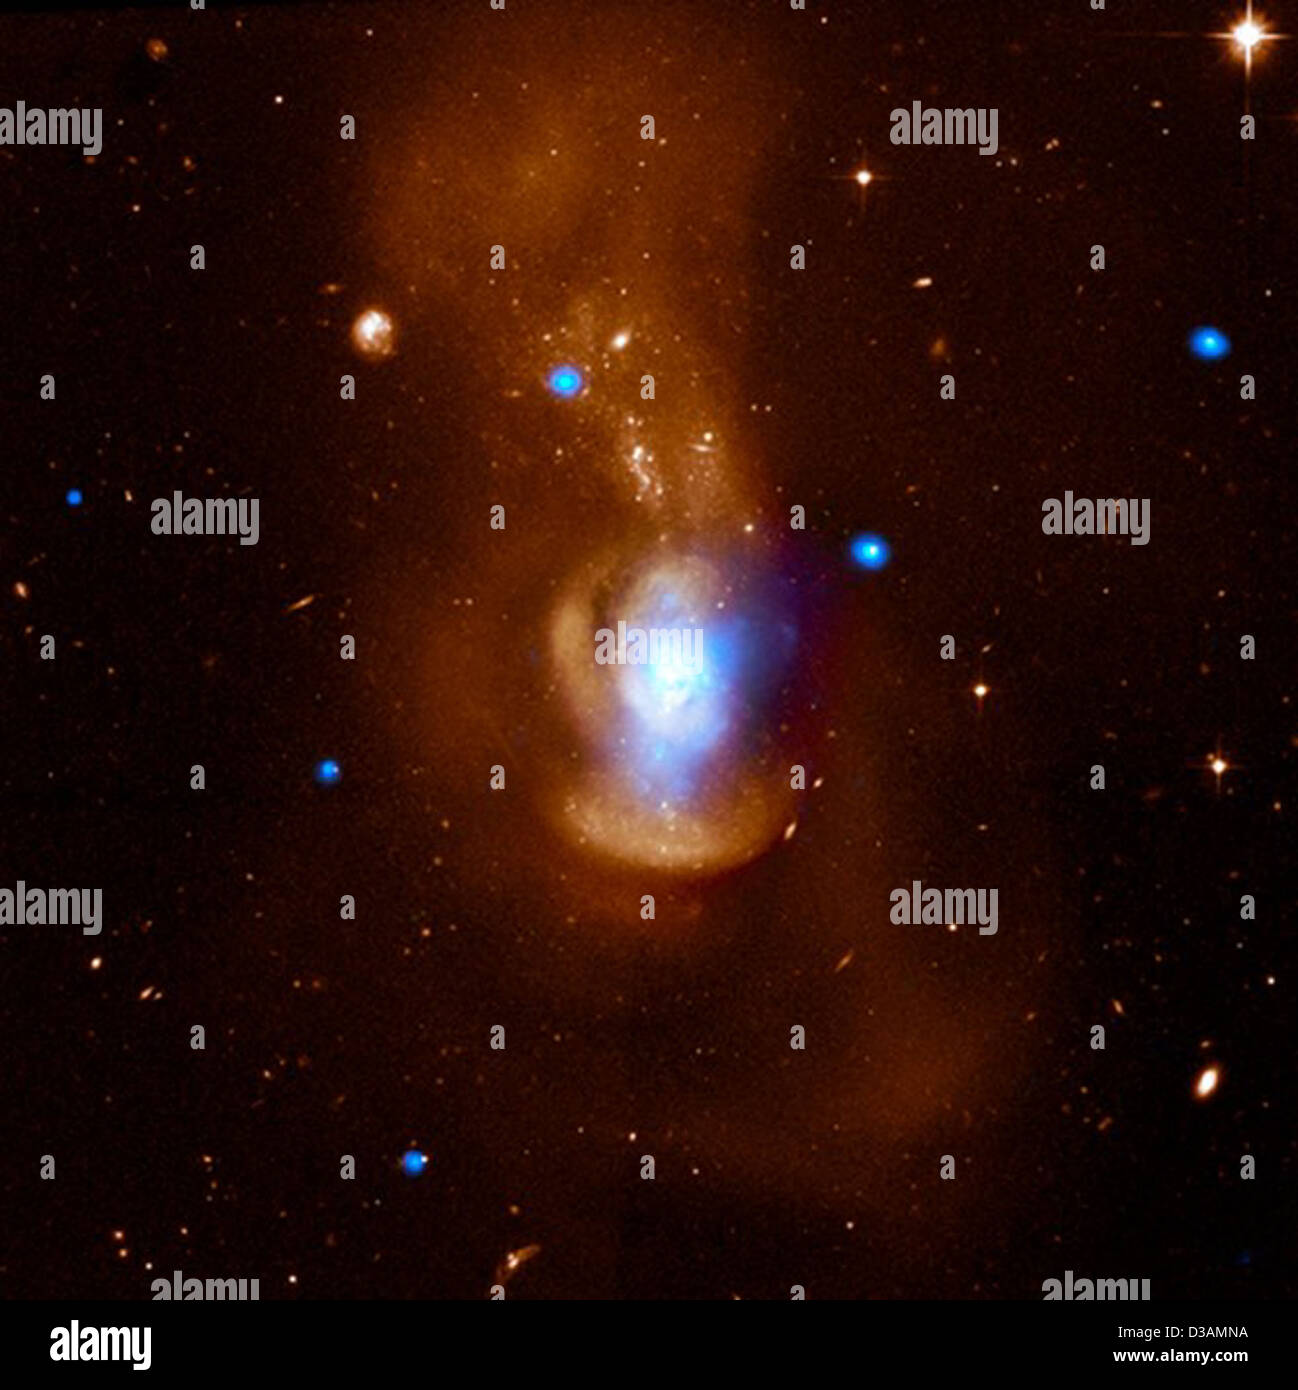 Medusa Galaxy nasconde un buco nero (NASA, 3/11/09) Foto Stock